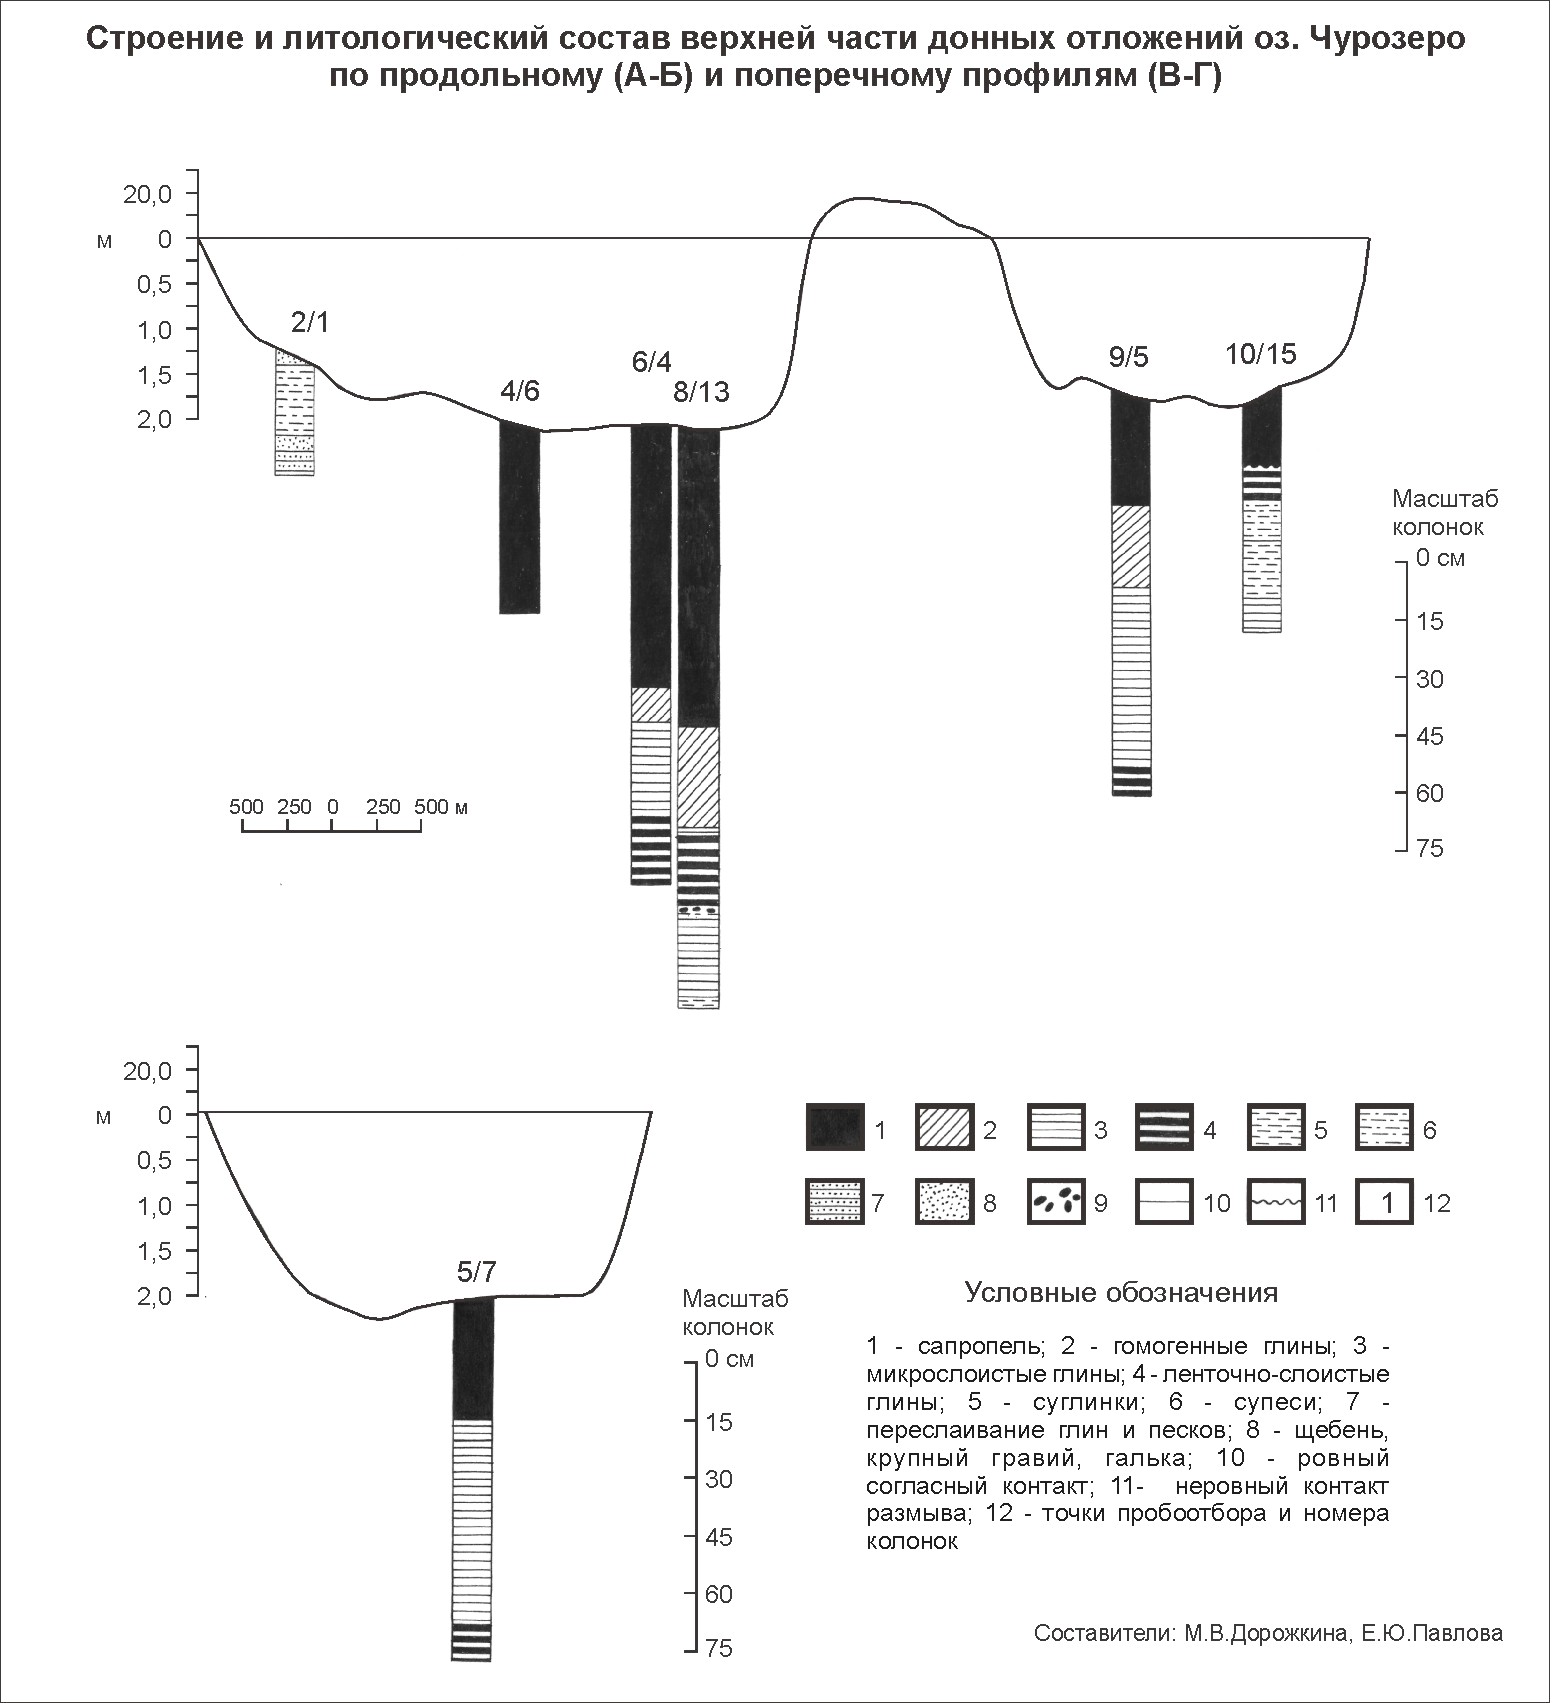 Churozero litology profiles 